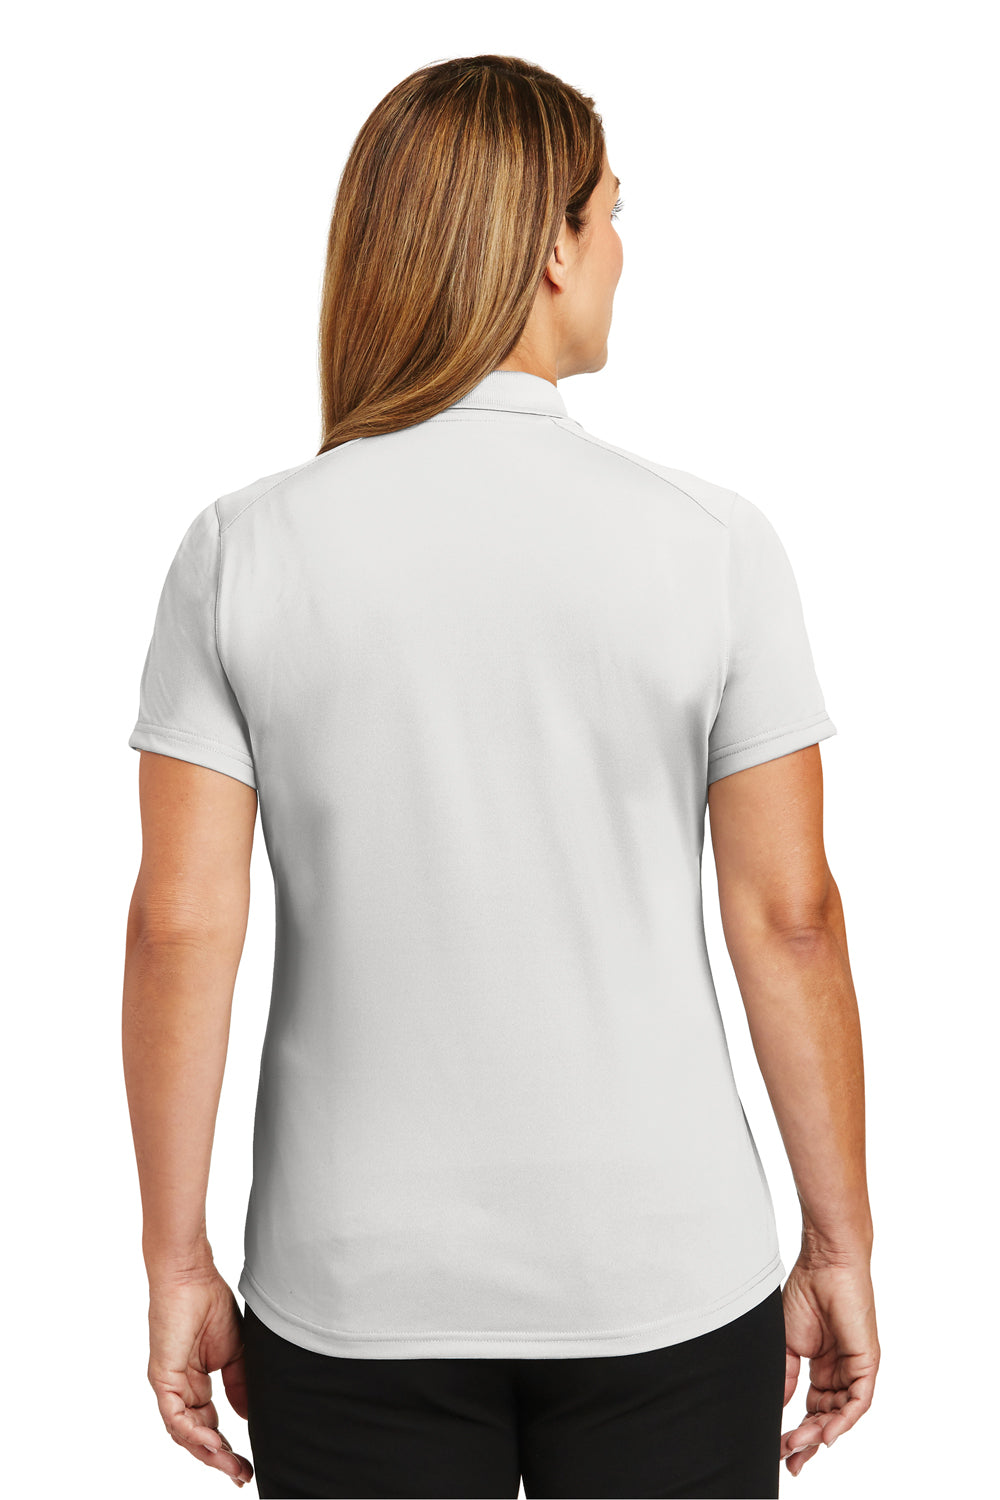 CornerStone CS419 Womens Select Moisture Wicking Short Sleeve Polo Shirt White Back